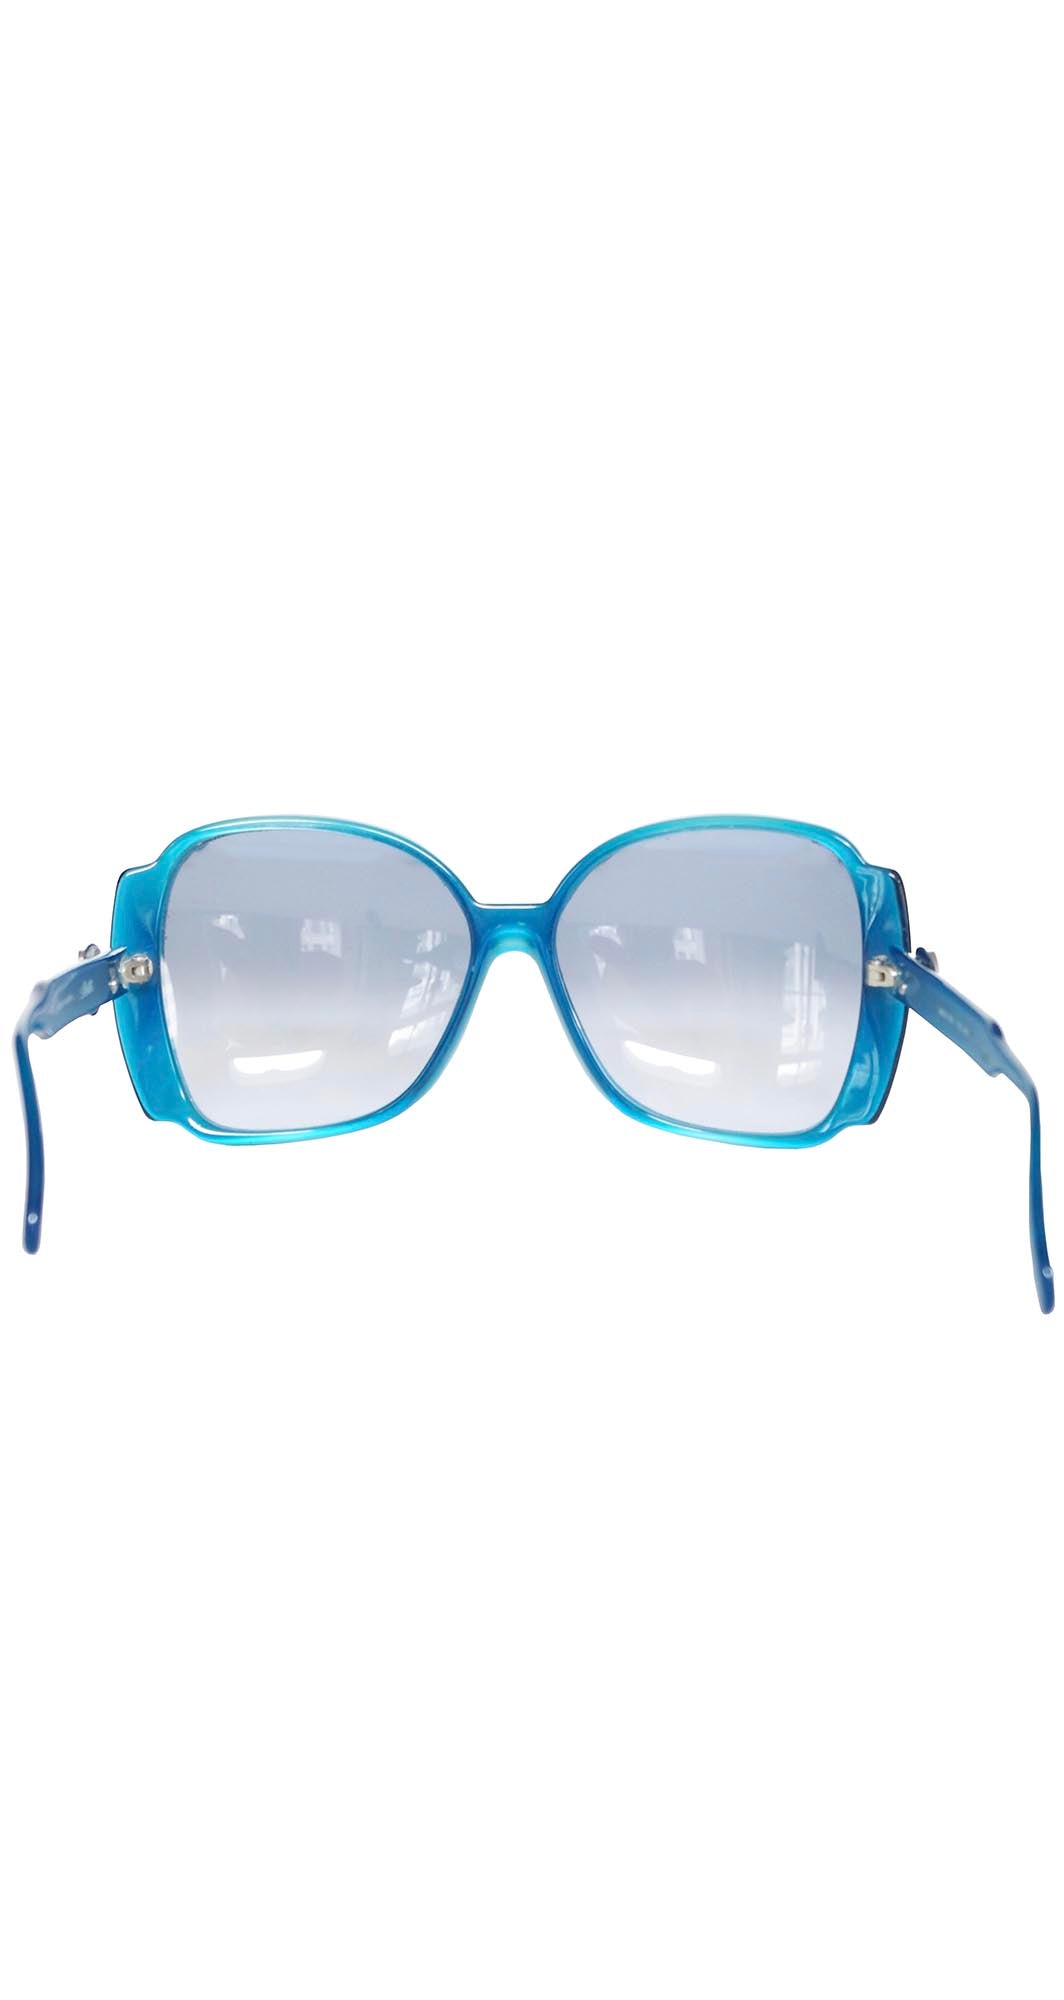 1970s Blue Oversized Sunglasses Mod.590